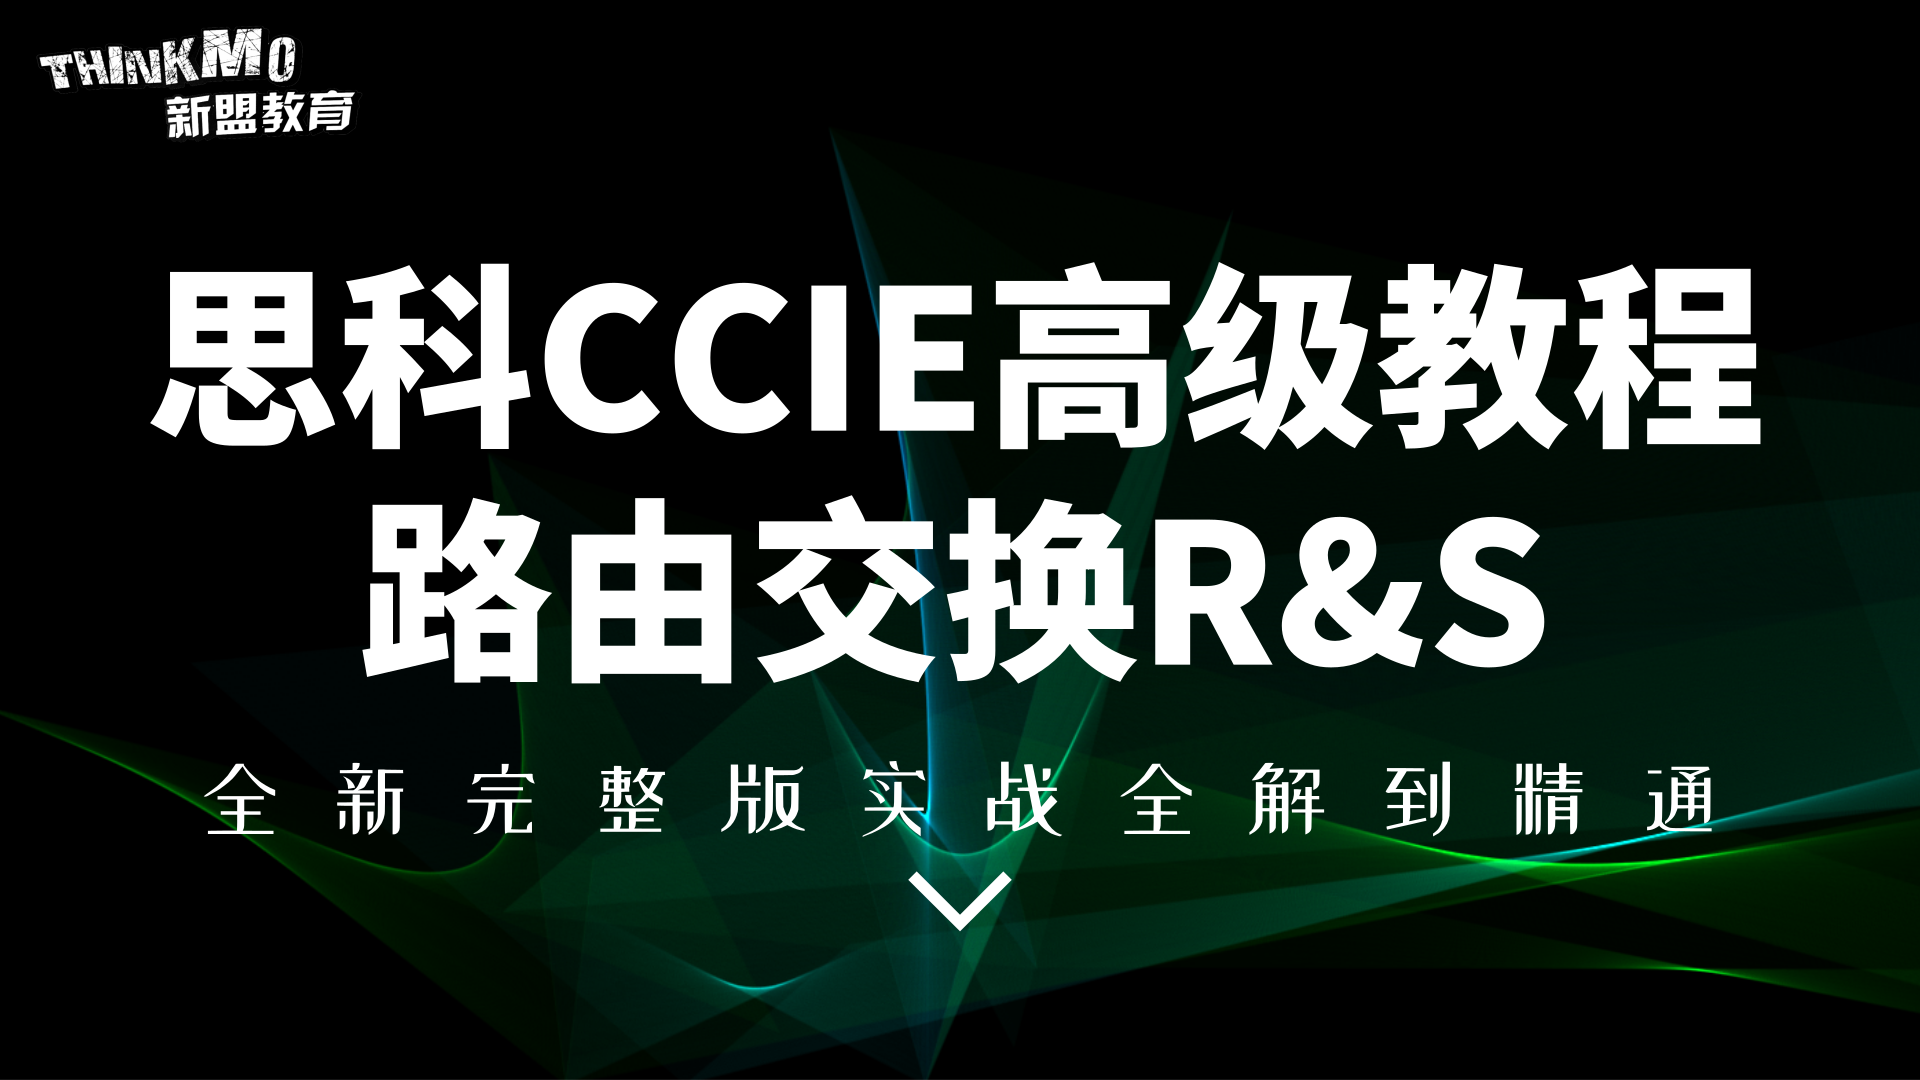 CCIE思科认证高级全套完整版实战课程（路由交换R&S）